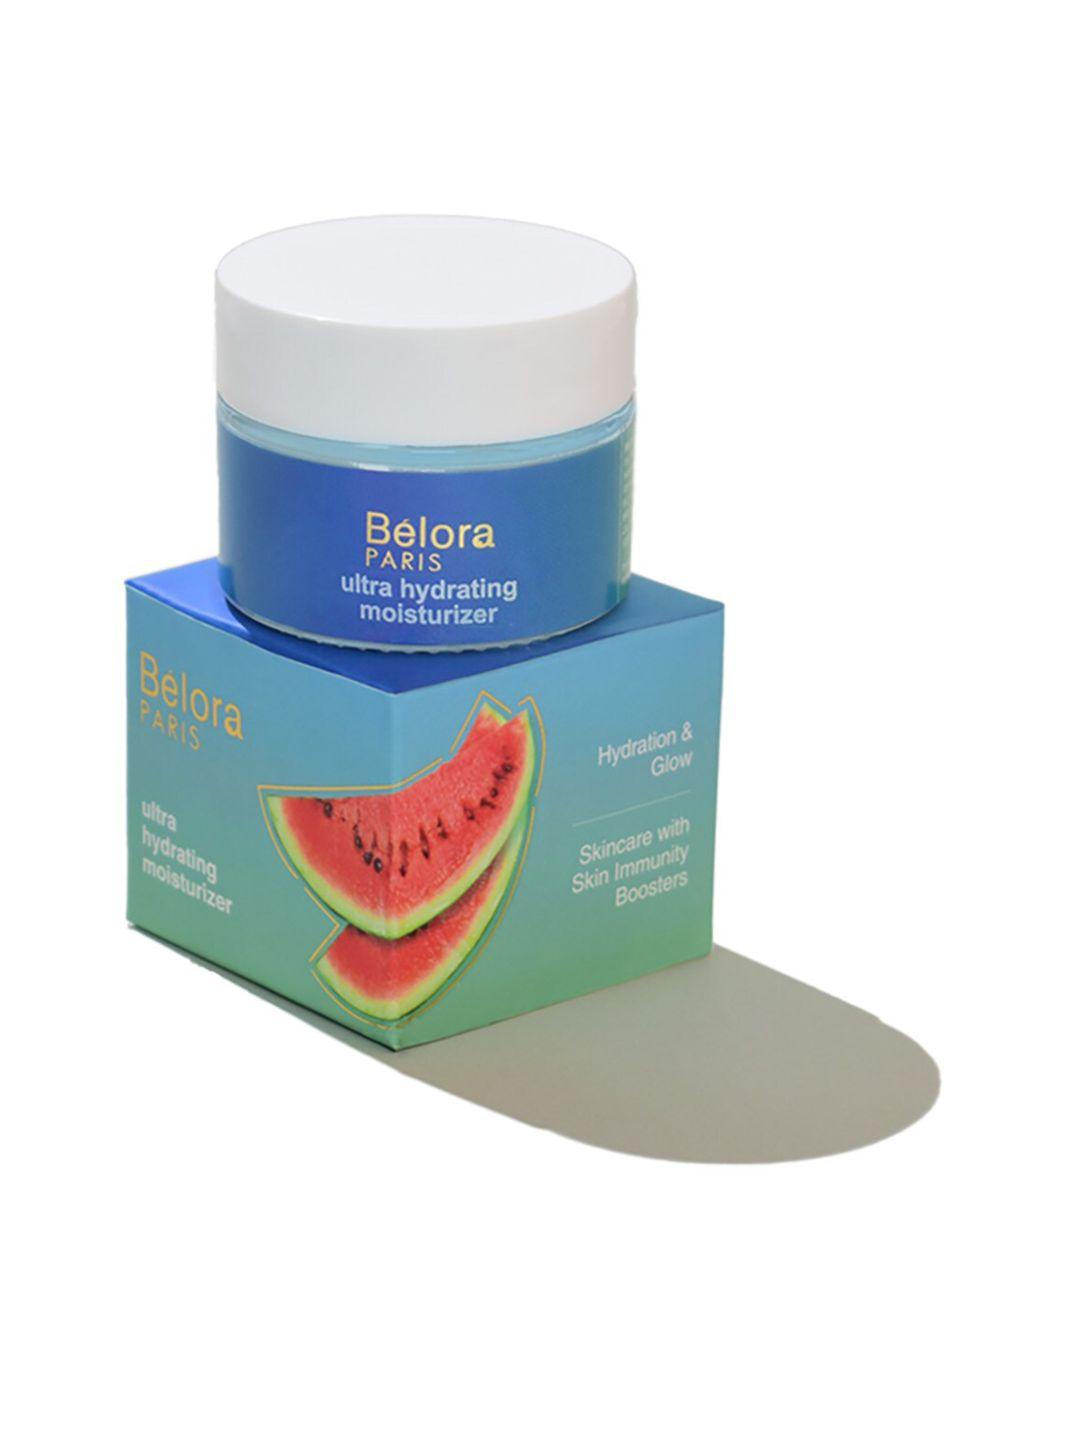 belora paris ultra hydrating moisturizer spf30 with hyaluronic acid & avocado oil - 50ml